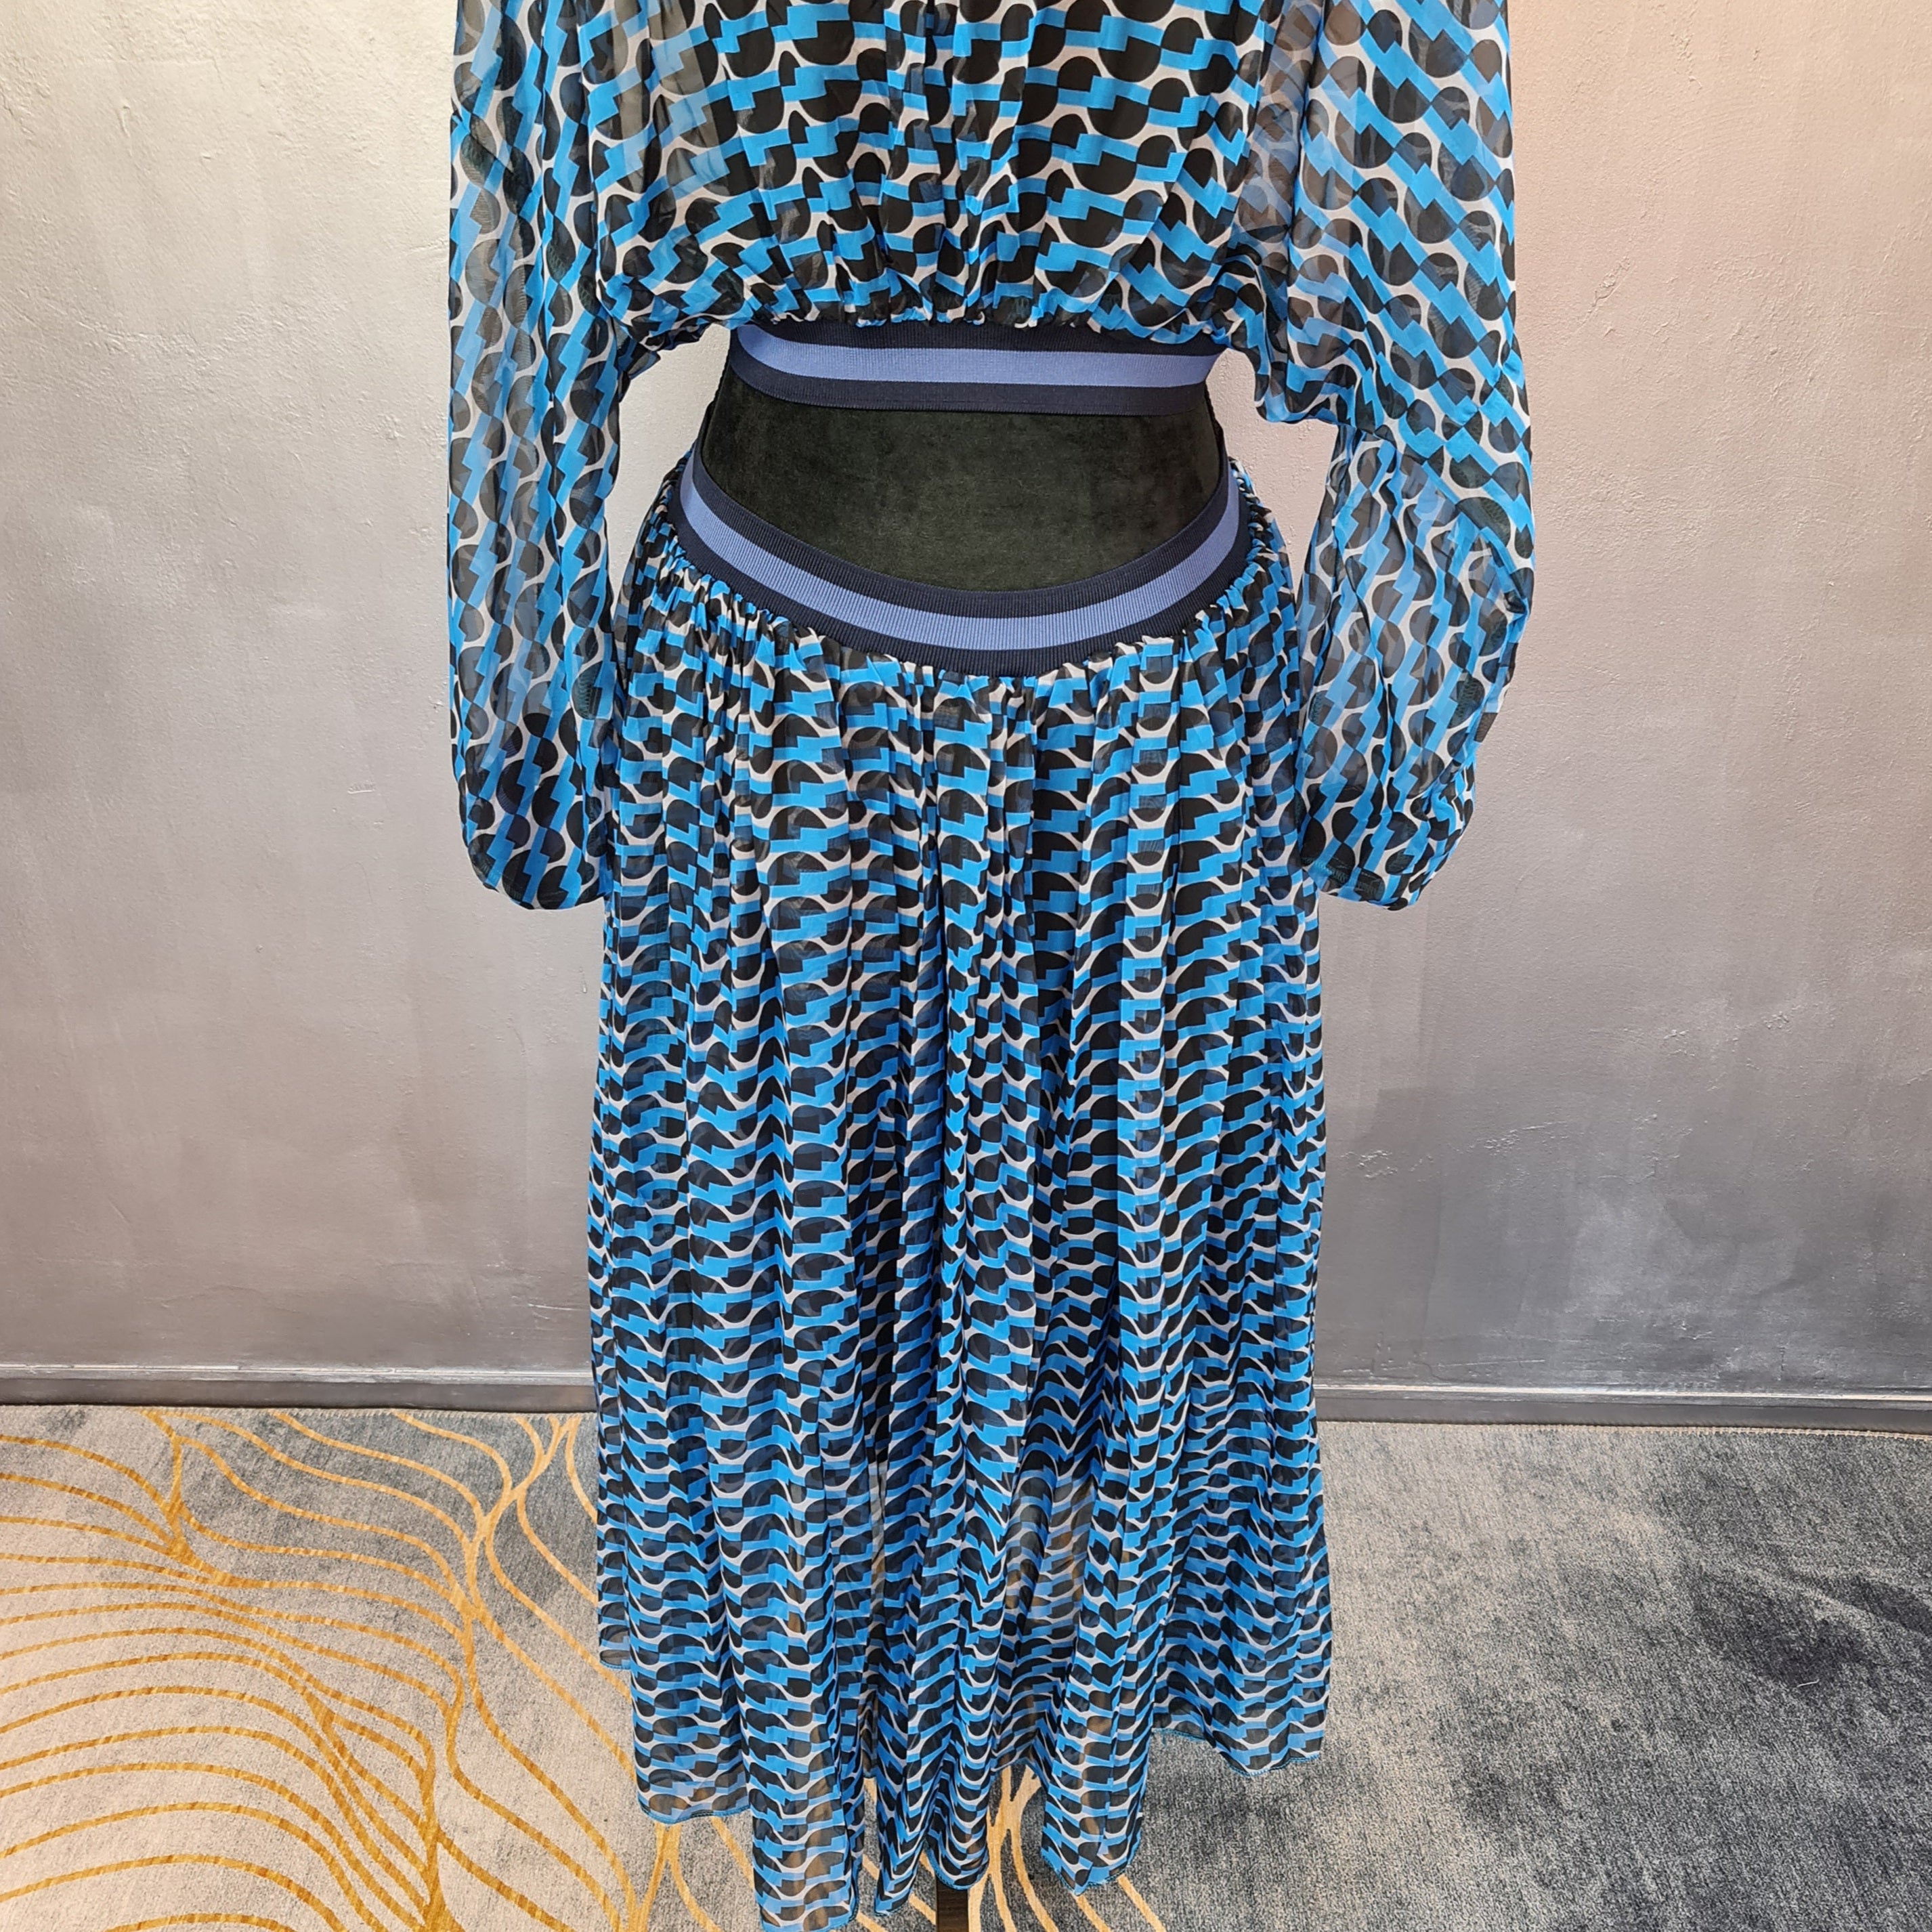 Gabijyte Irregular Design Dress Featured by Nicoe-SimpleModerne